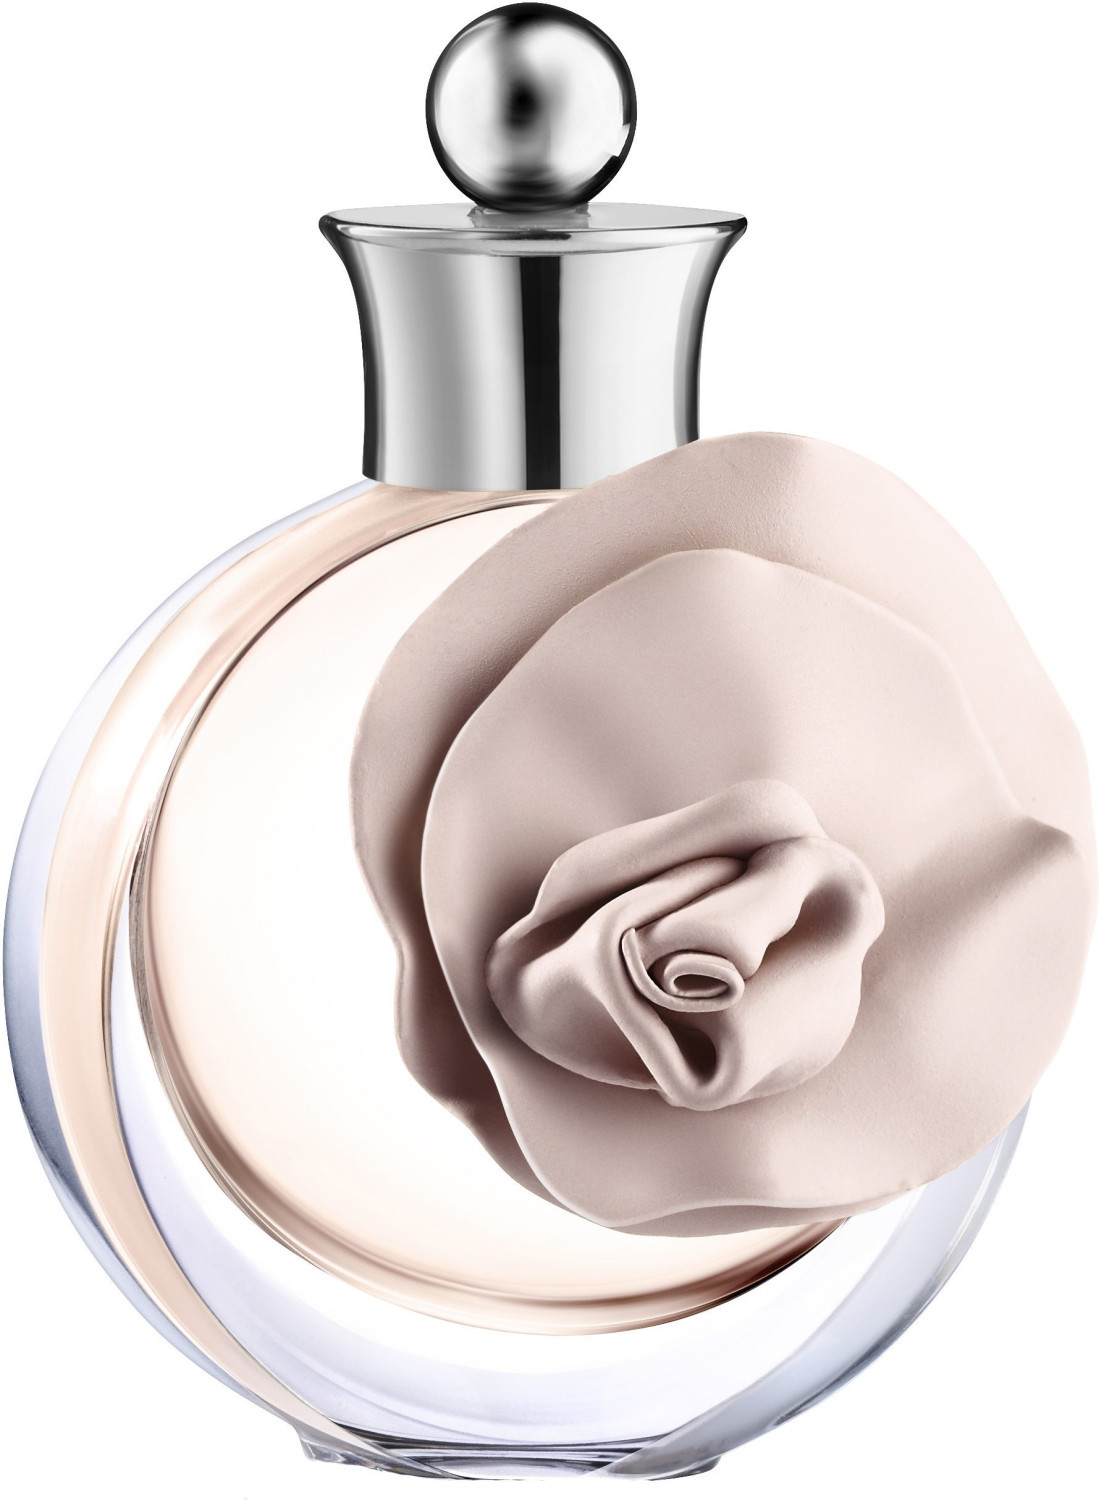 Valentino Valentina Eau Parfum from £38.54 (Today) – January sales idealo.co.uk